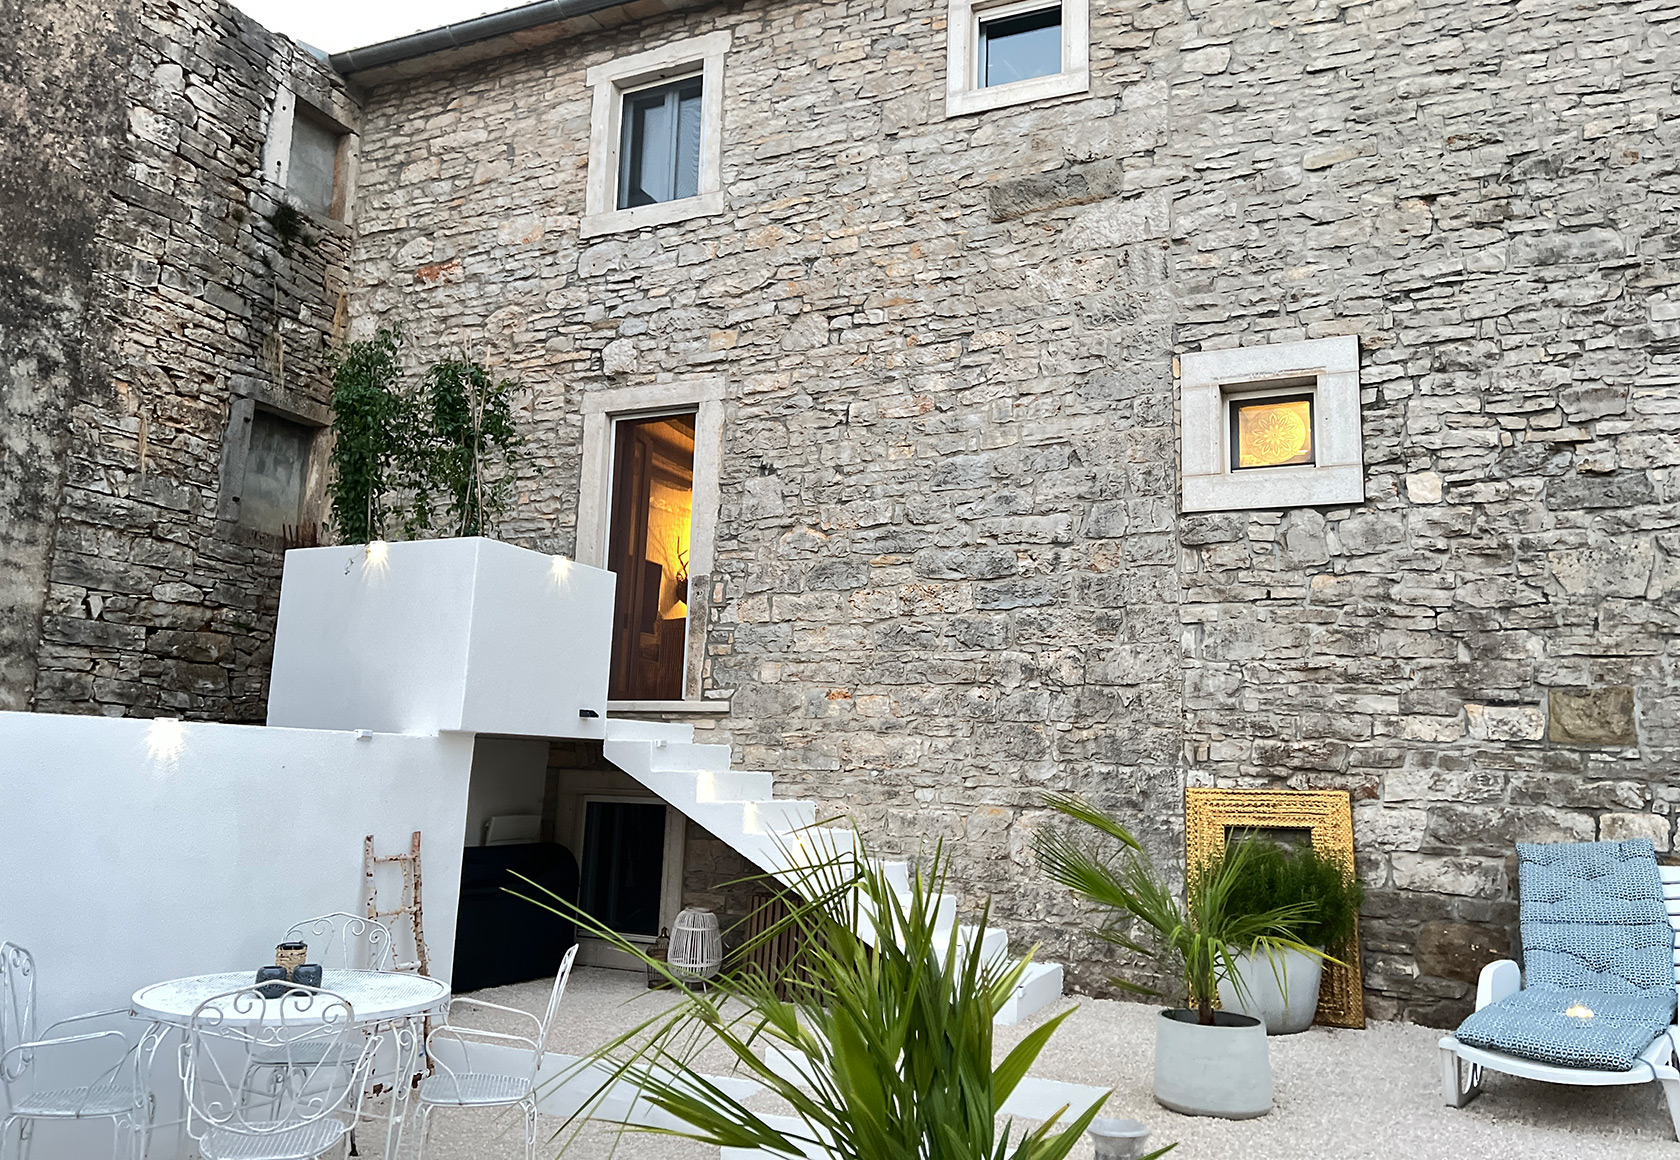 Property for sale in Istria, Croatia